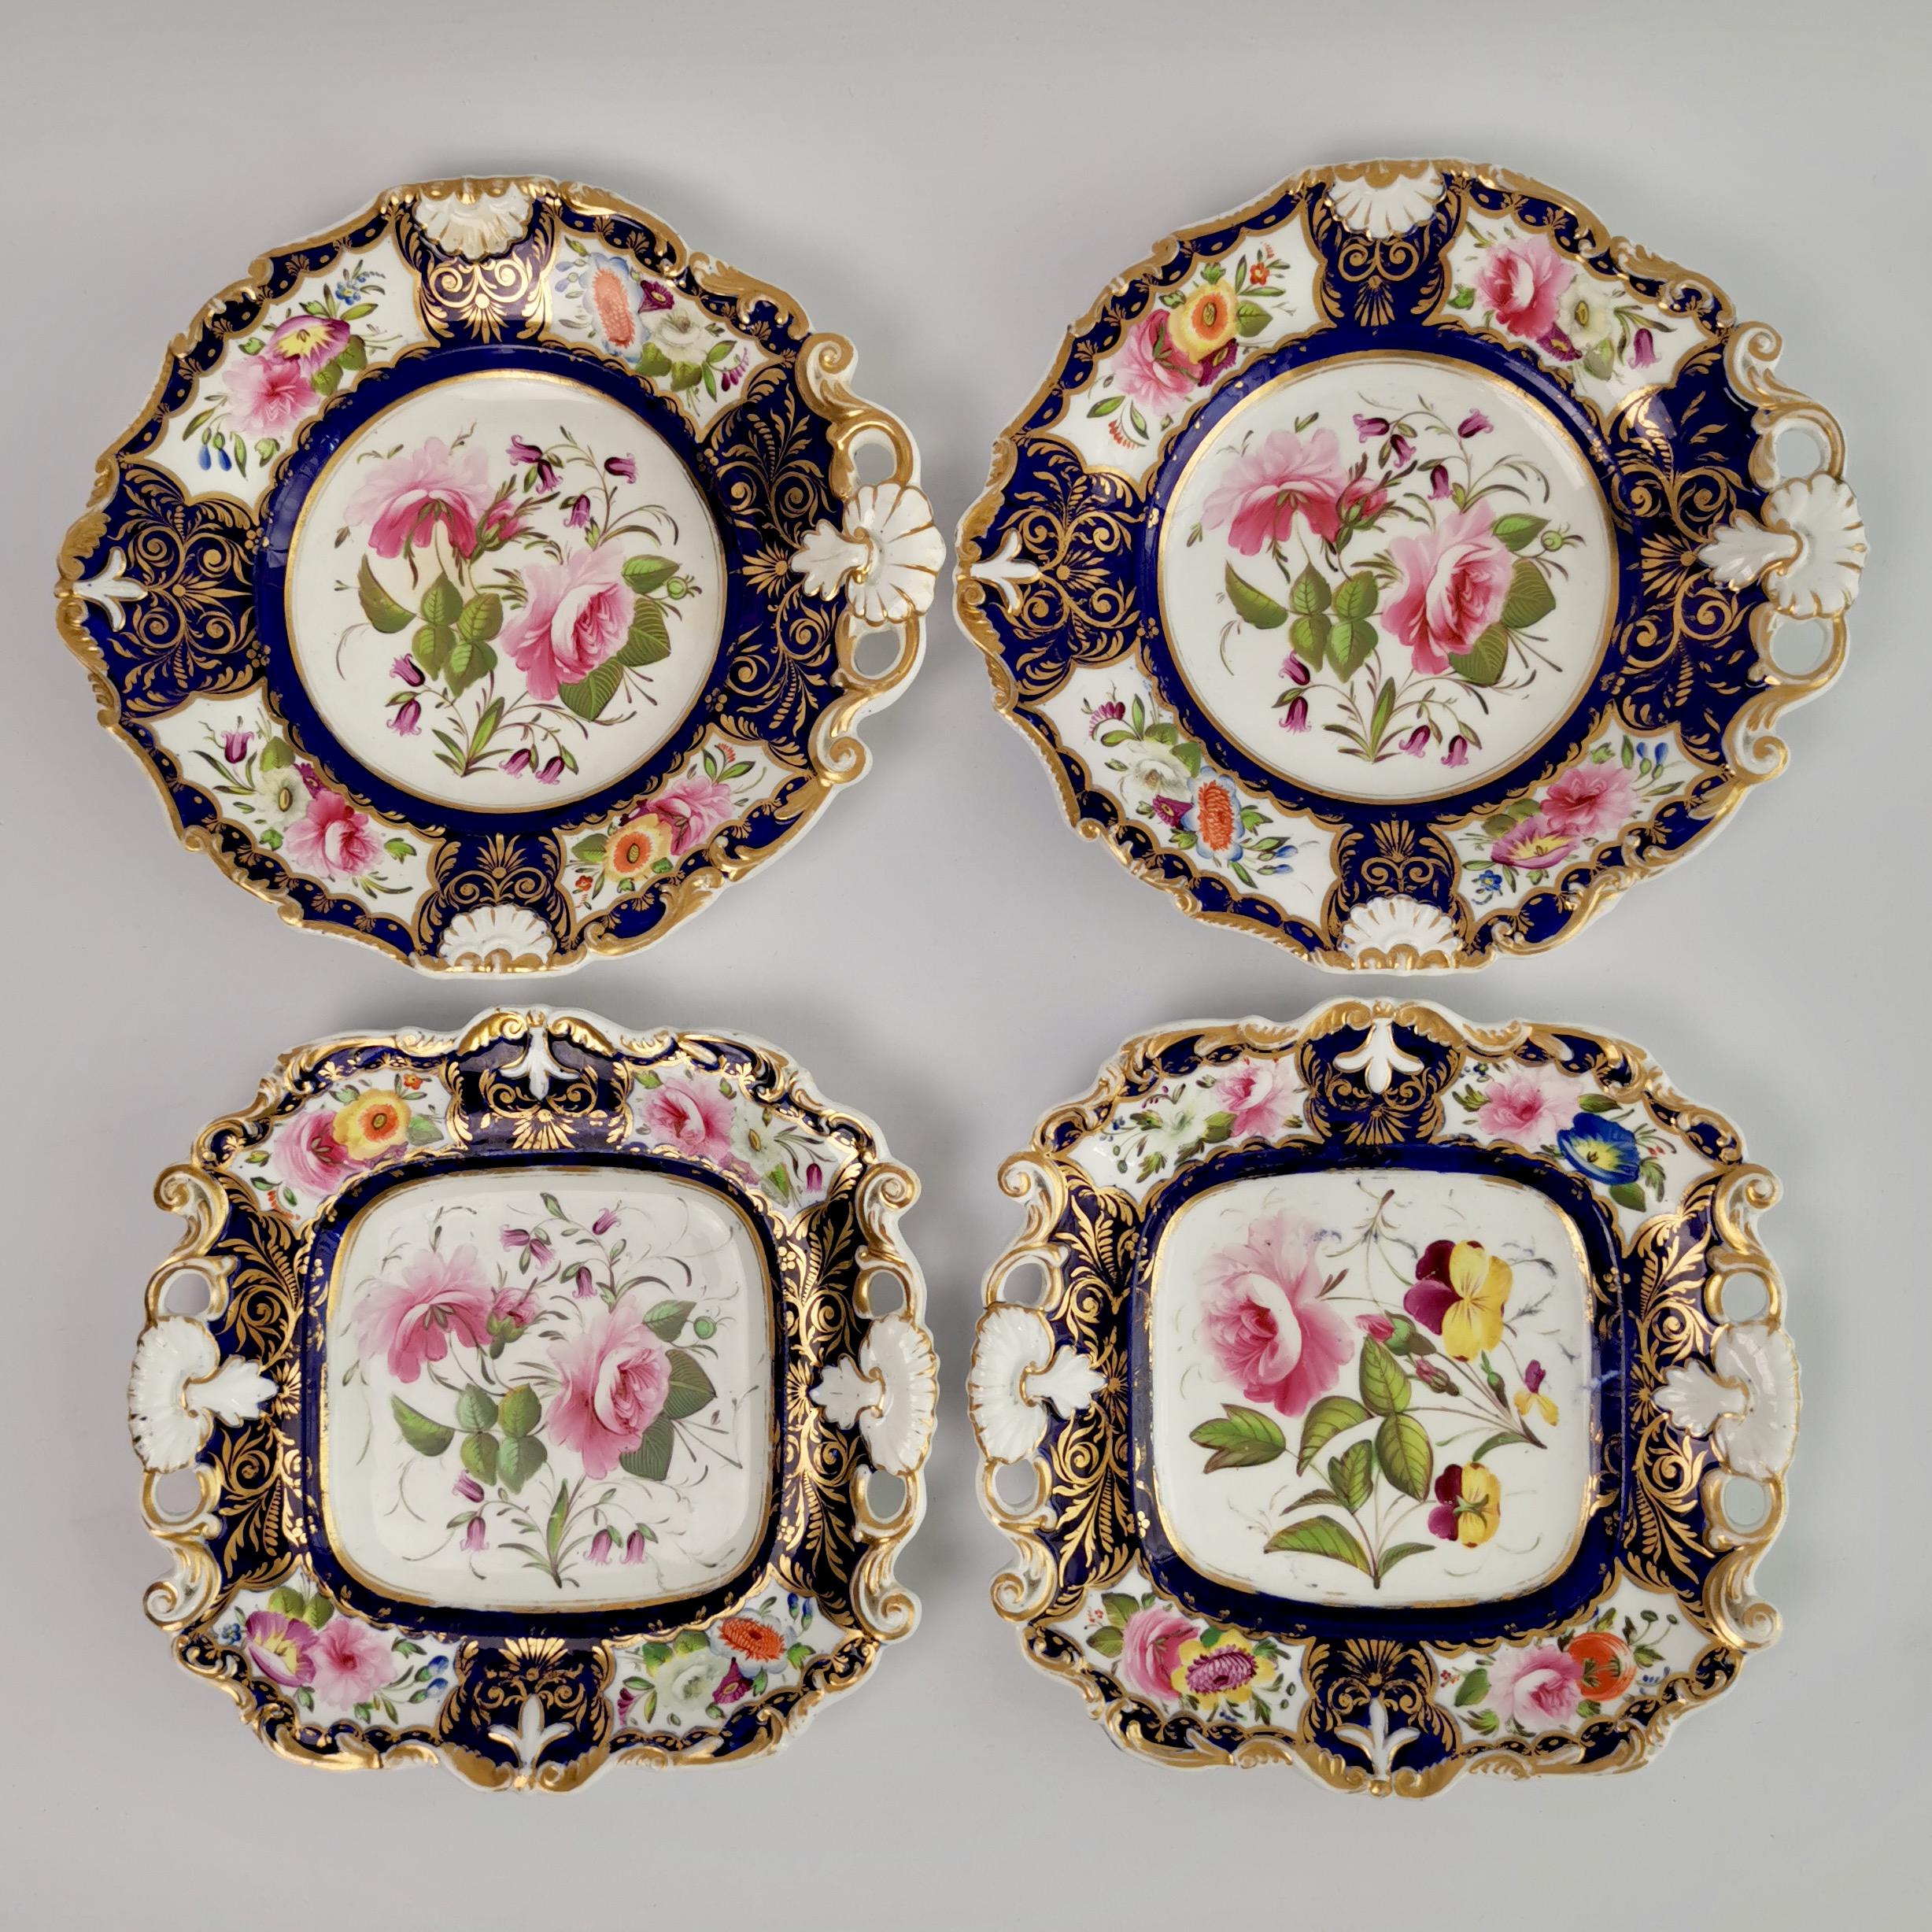 English New Hall Porcelain Dessert Service, Cobalt Blue with Flowers, Regency 1824-1830